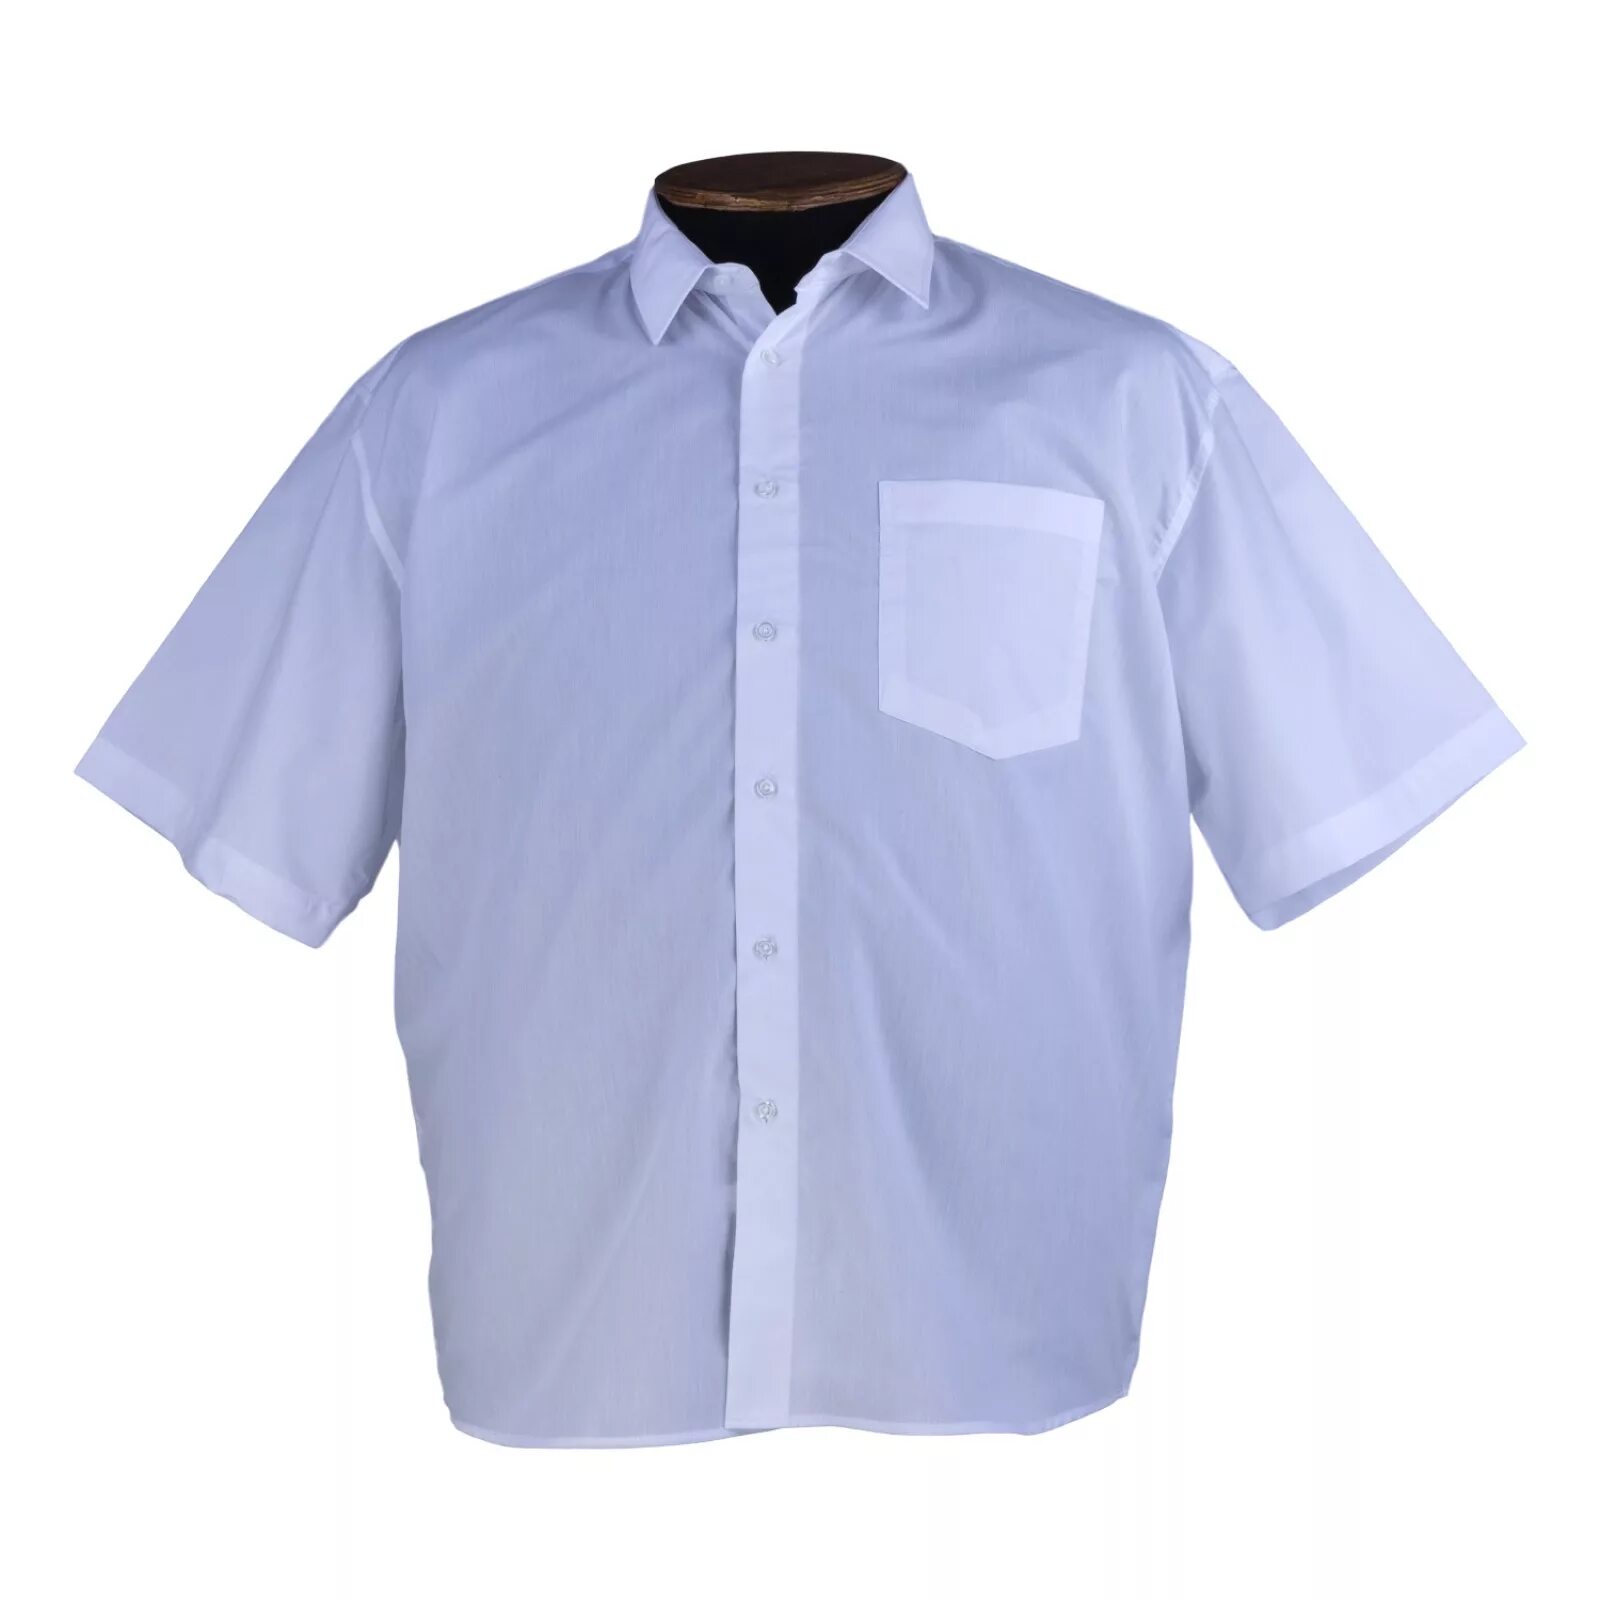 Рубашка мужская mh1081tam. Рубашка мужская поло Pentagon. Springfield Linen est1988 рубашка мужская. Рубашка с коротким рукавом мужская.